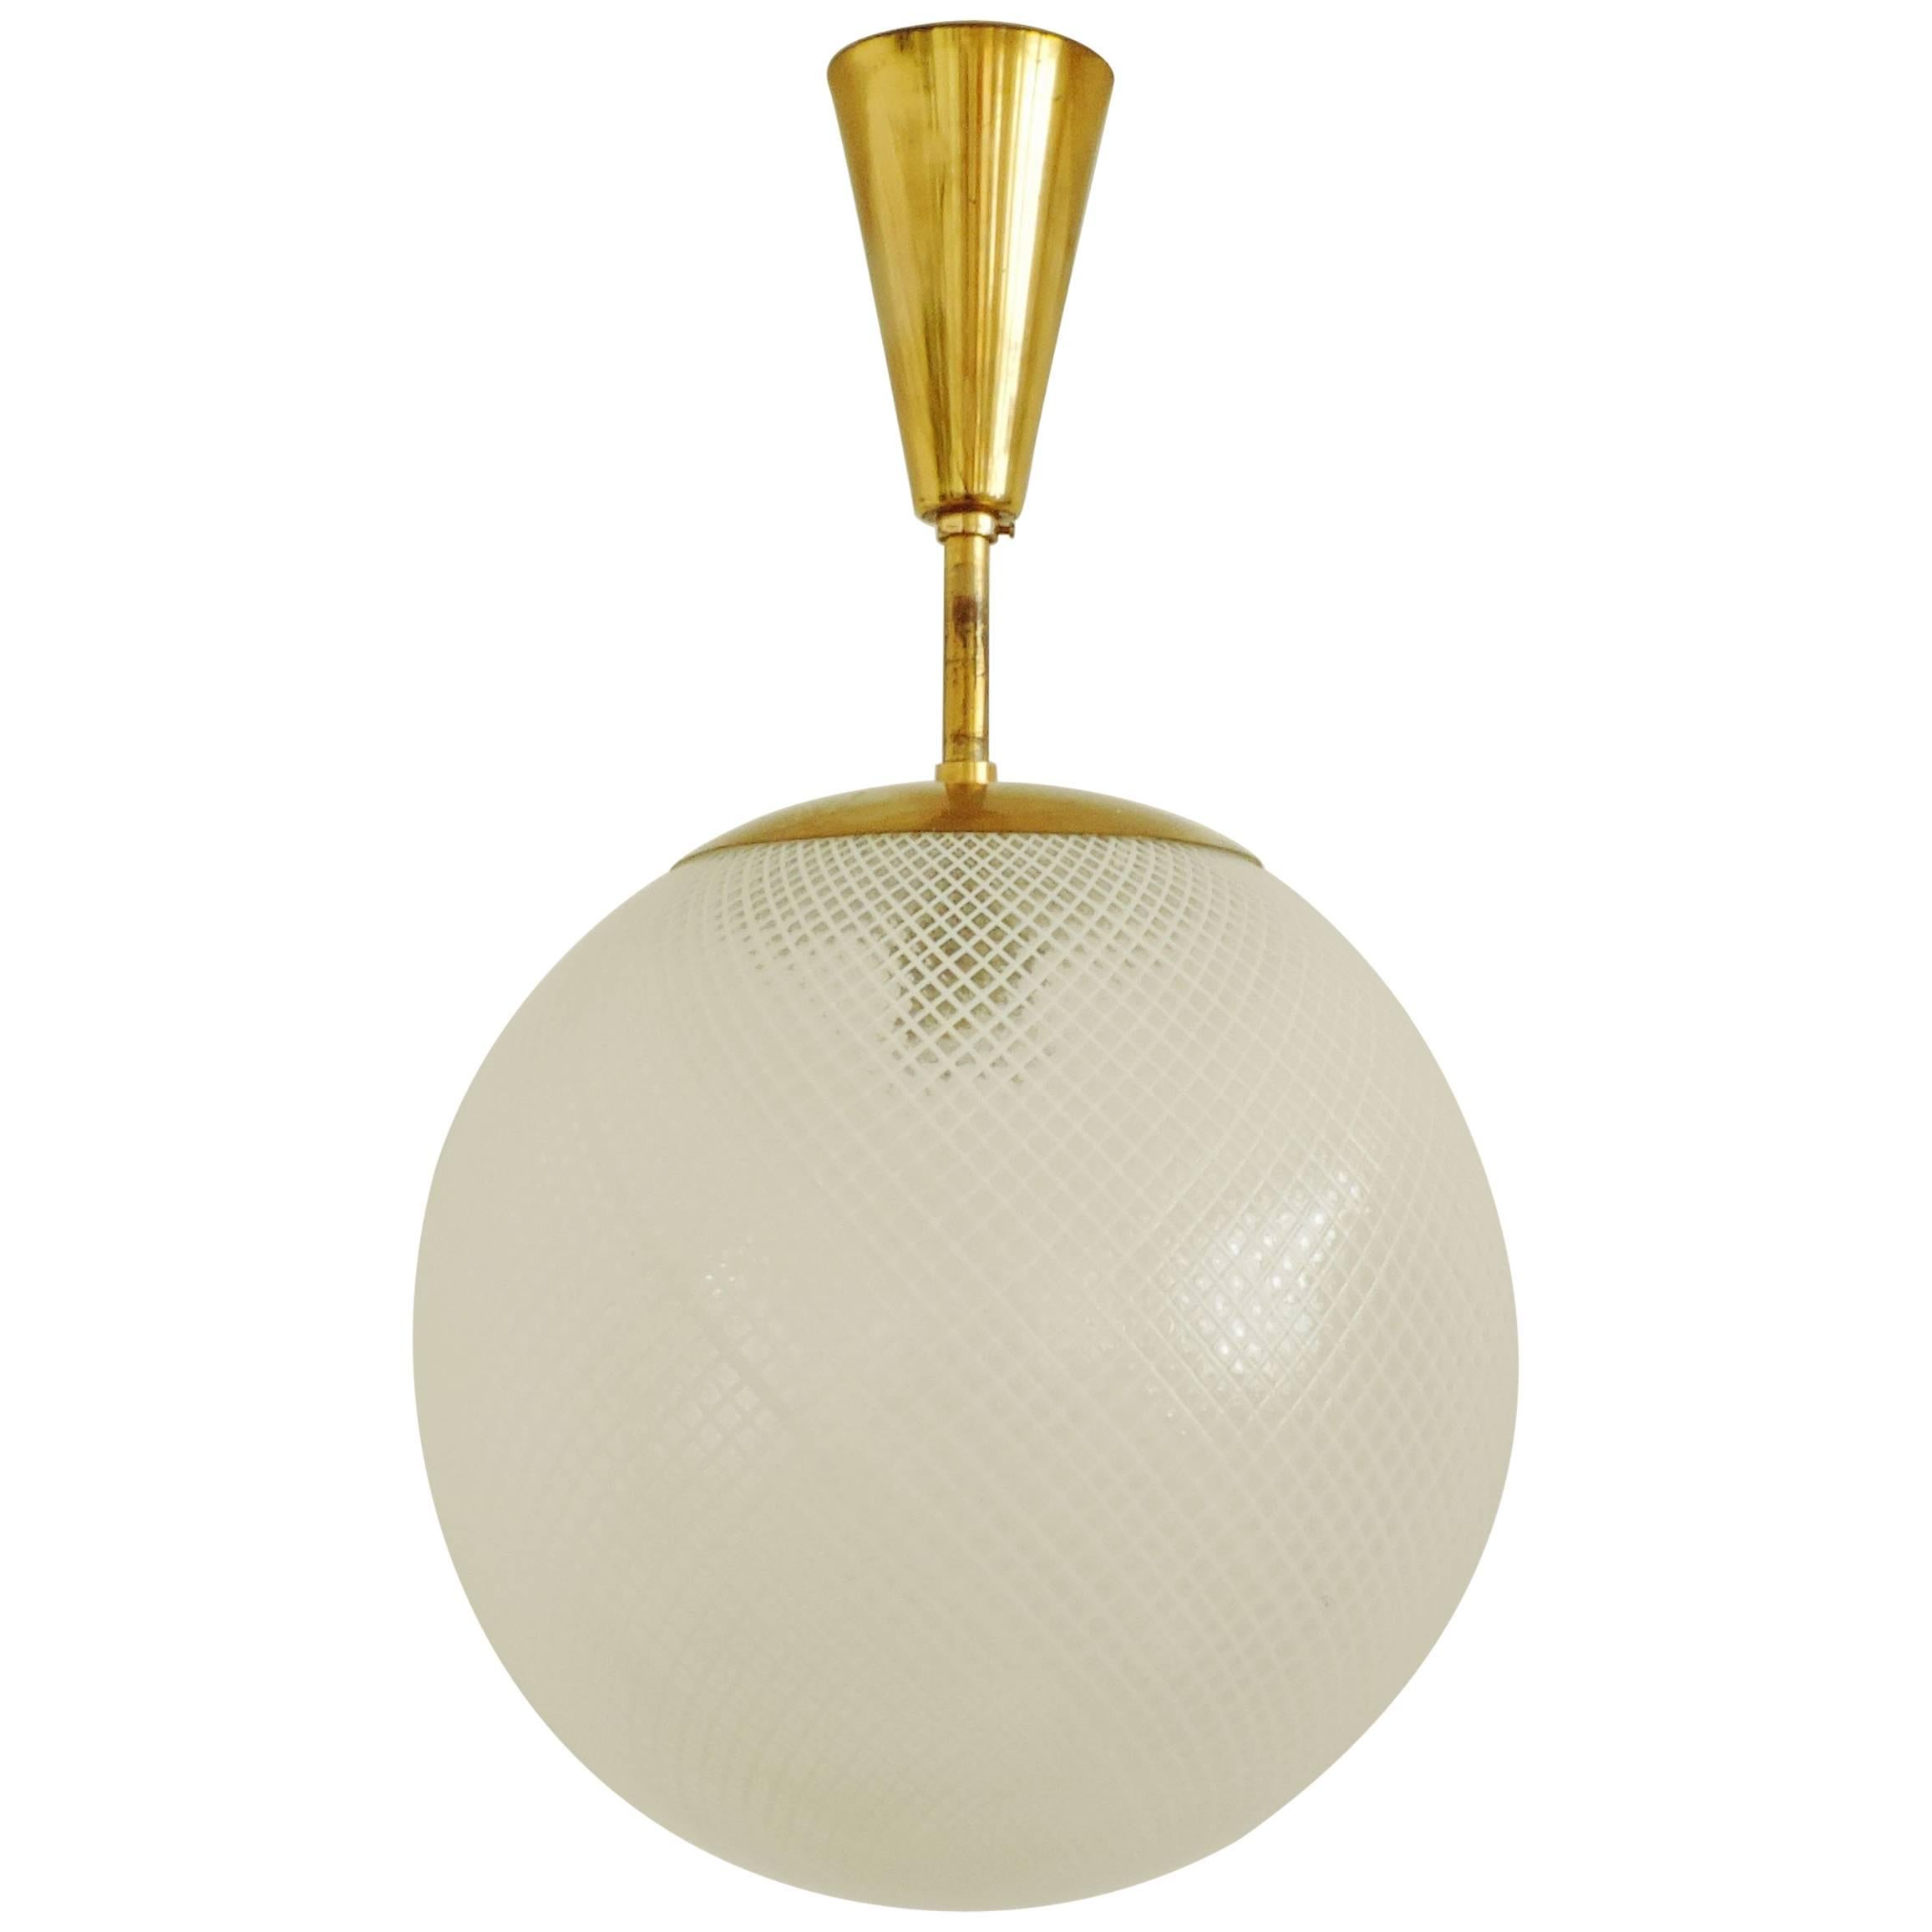 Splendid Carlo Scarpa Ceiling Lamp for Venini